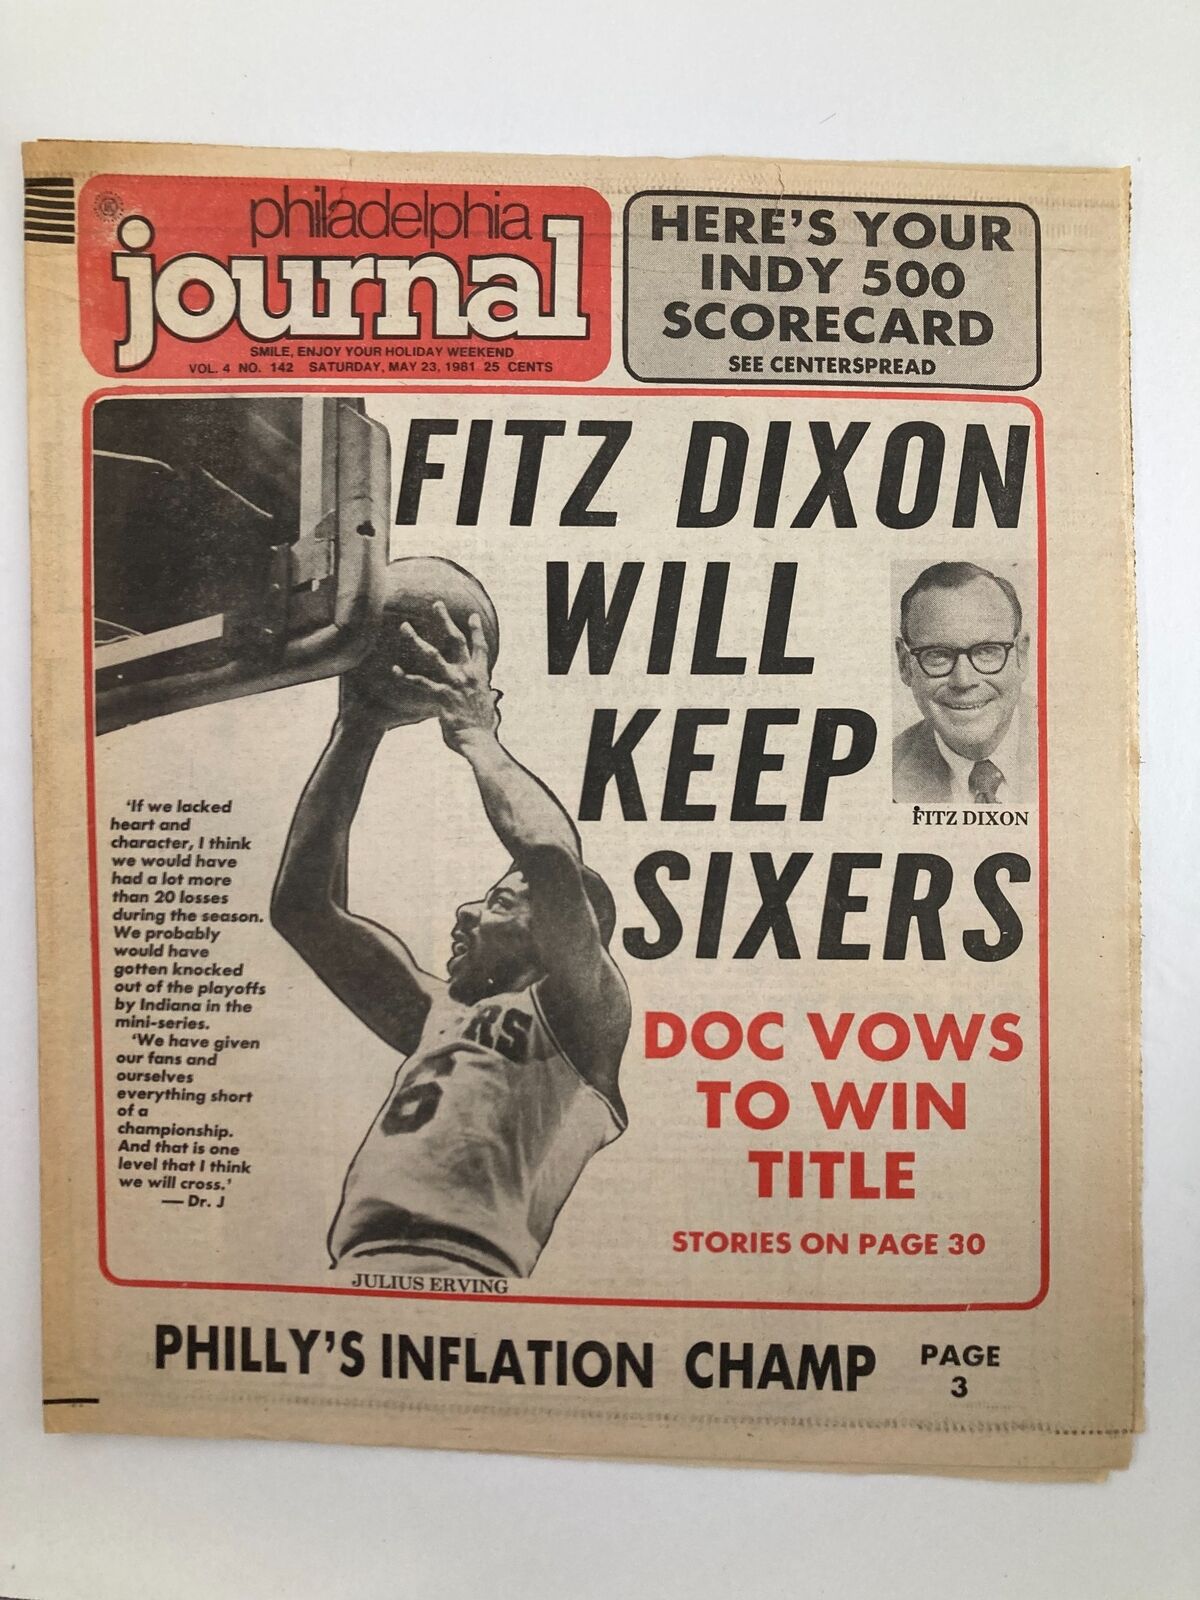 Philadelphia Journal Tabloid May 23 1981 Vol 4 #142 NBA Sixers Julius Erving